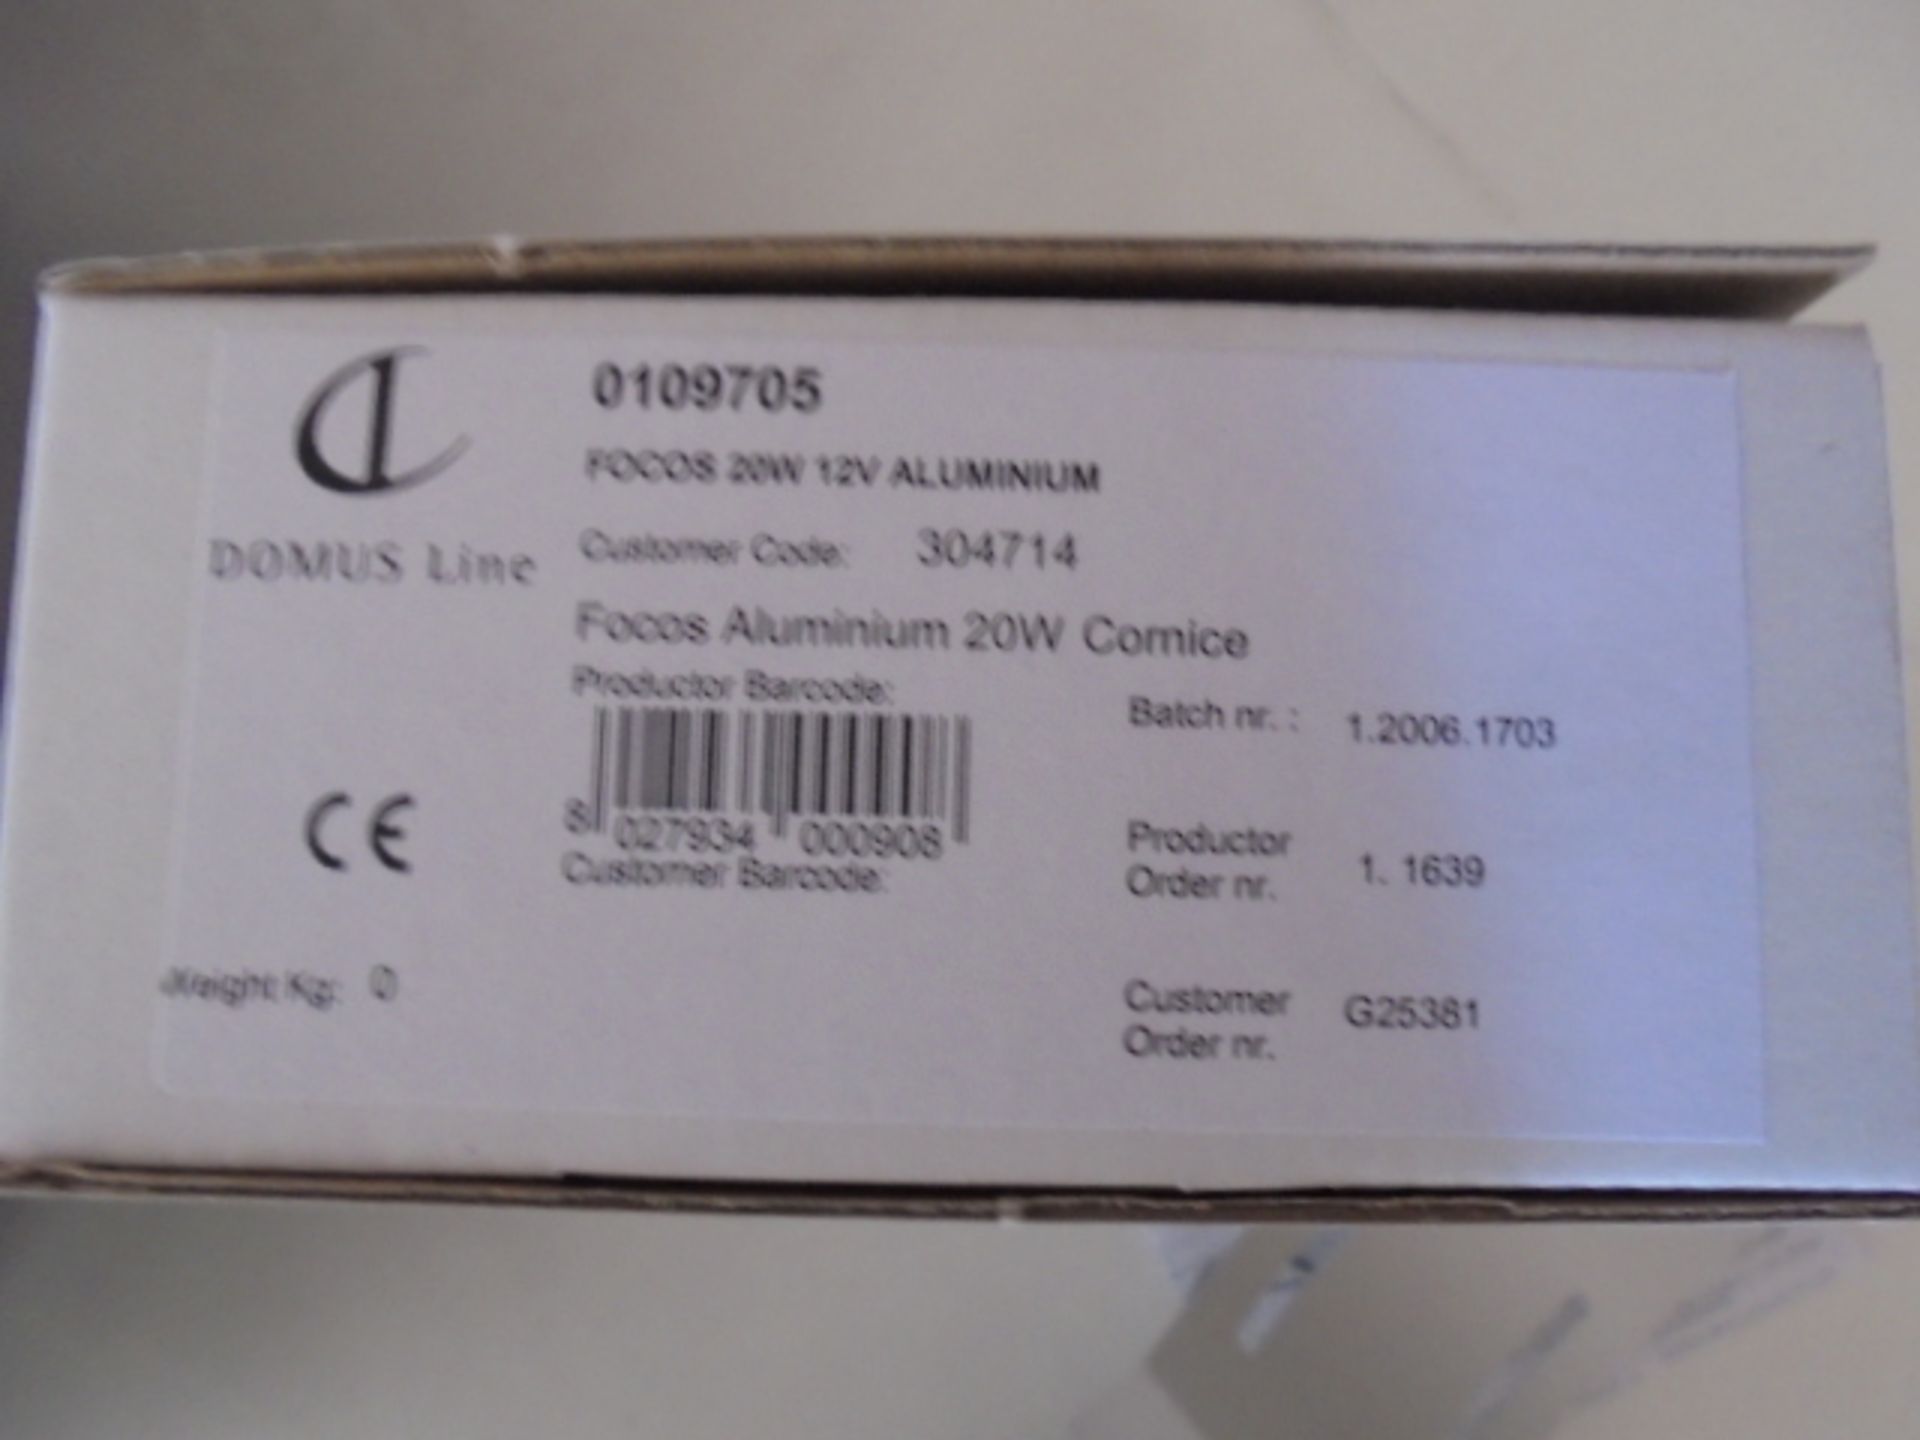 1 Box x 20 Focos Aluminium 20W 12V Cornice Spot Light - Image 2 of 2